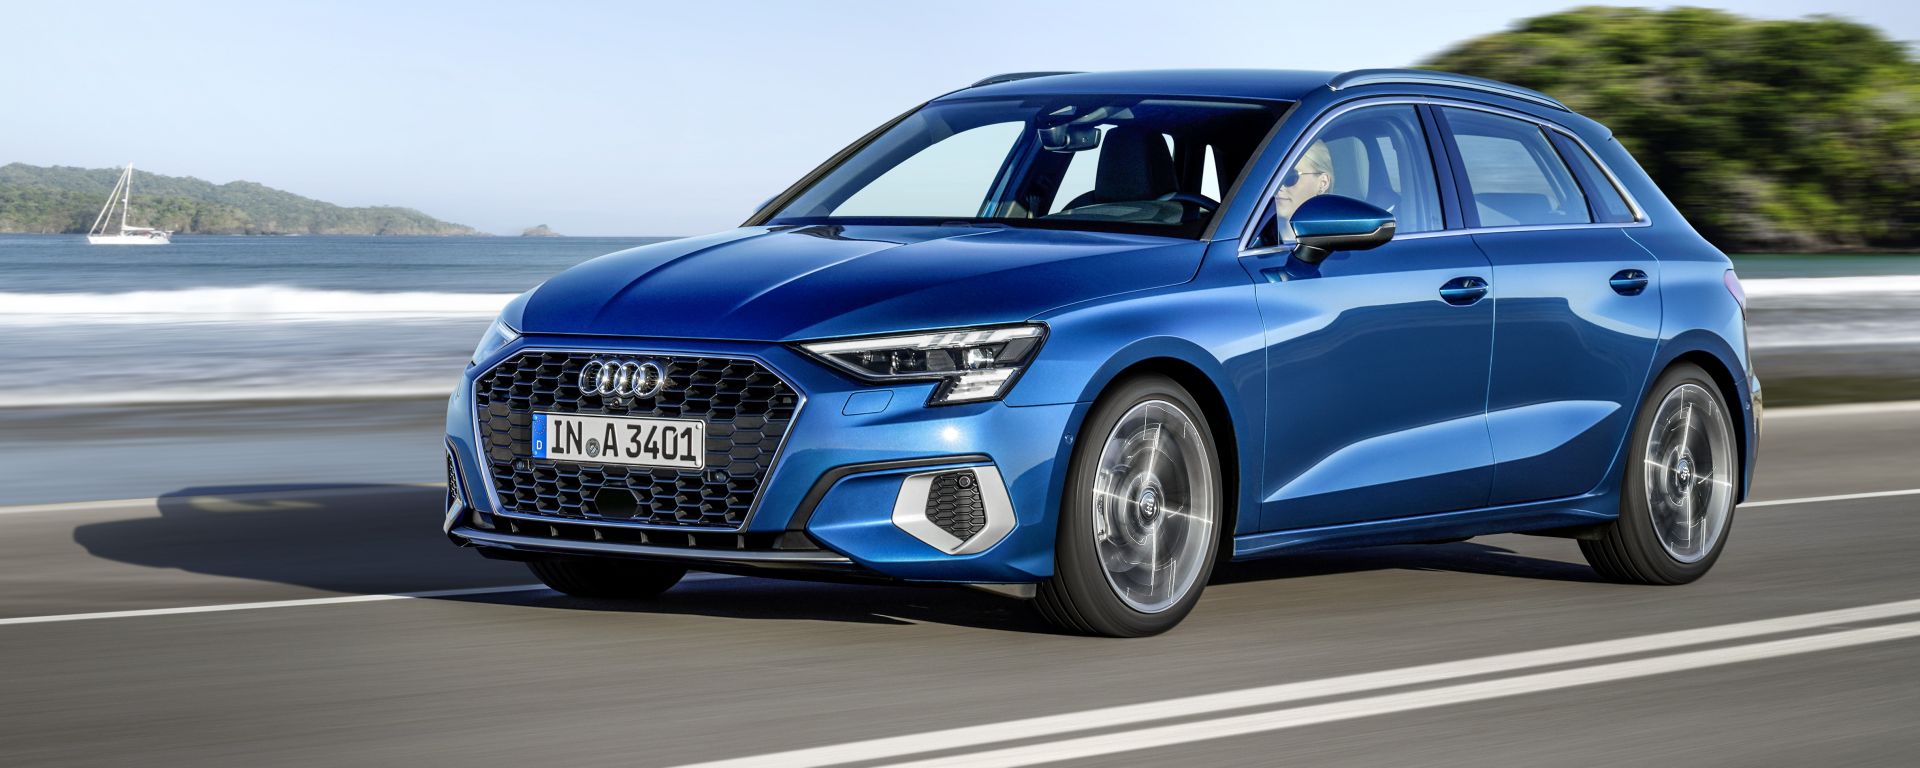 Nuova Audi A3 Sportback 2020 Motori Uscita Prezzi Motorbox